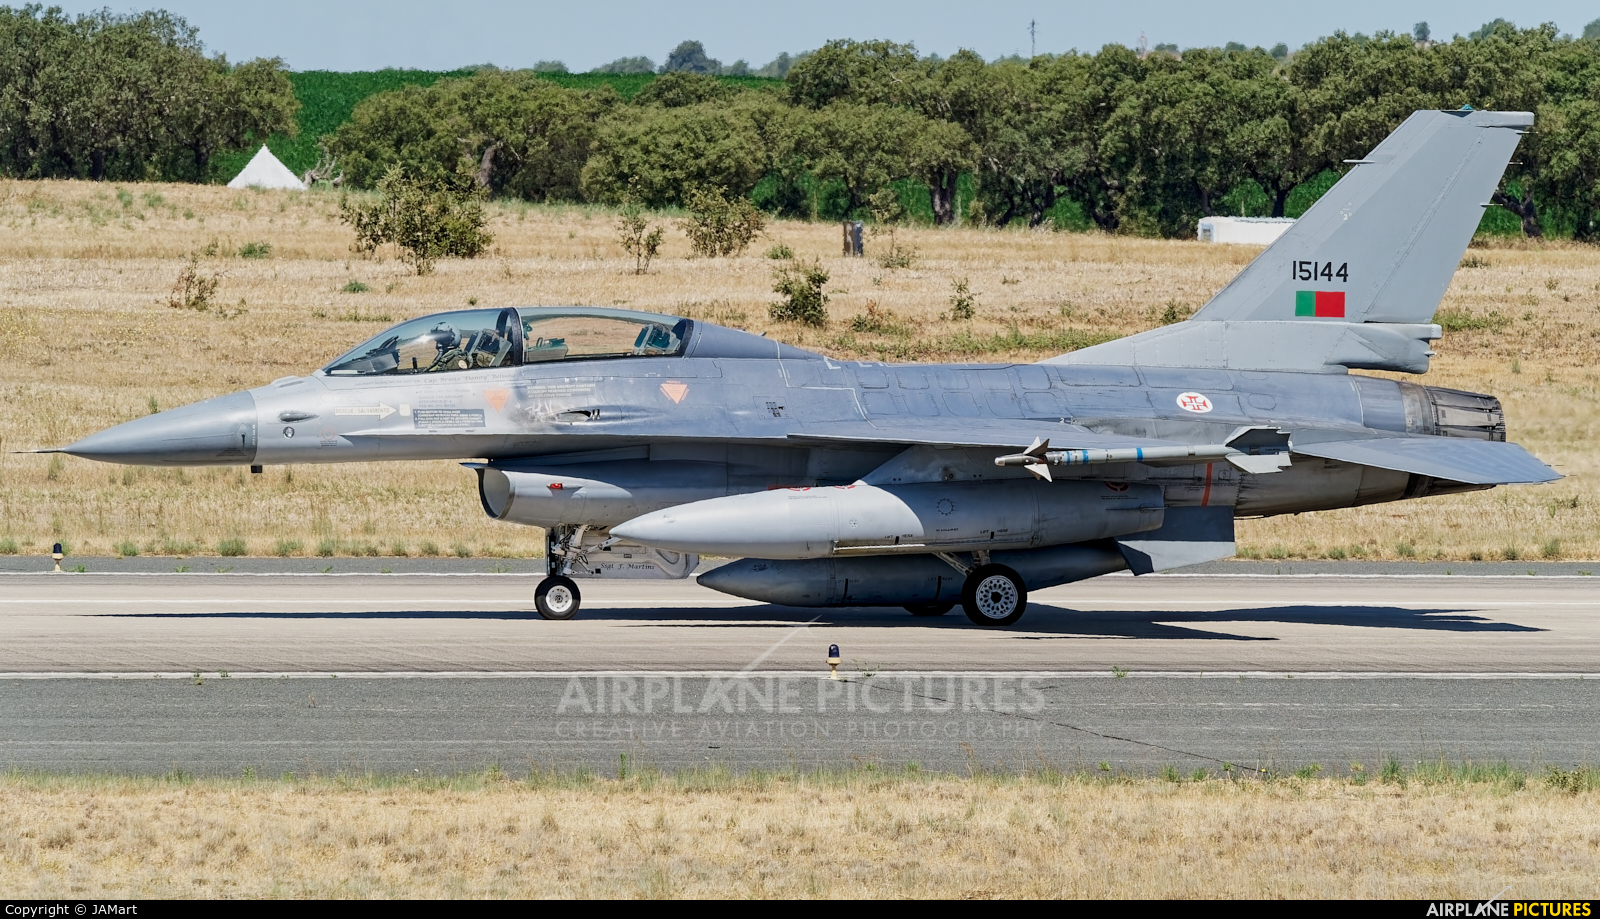 Portugal - Air Force 15144 aircraft at Beja AB